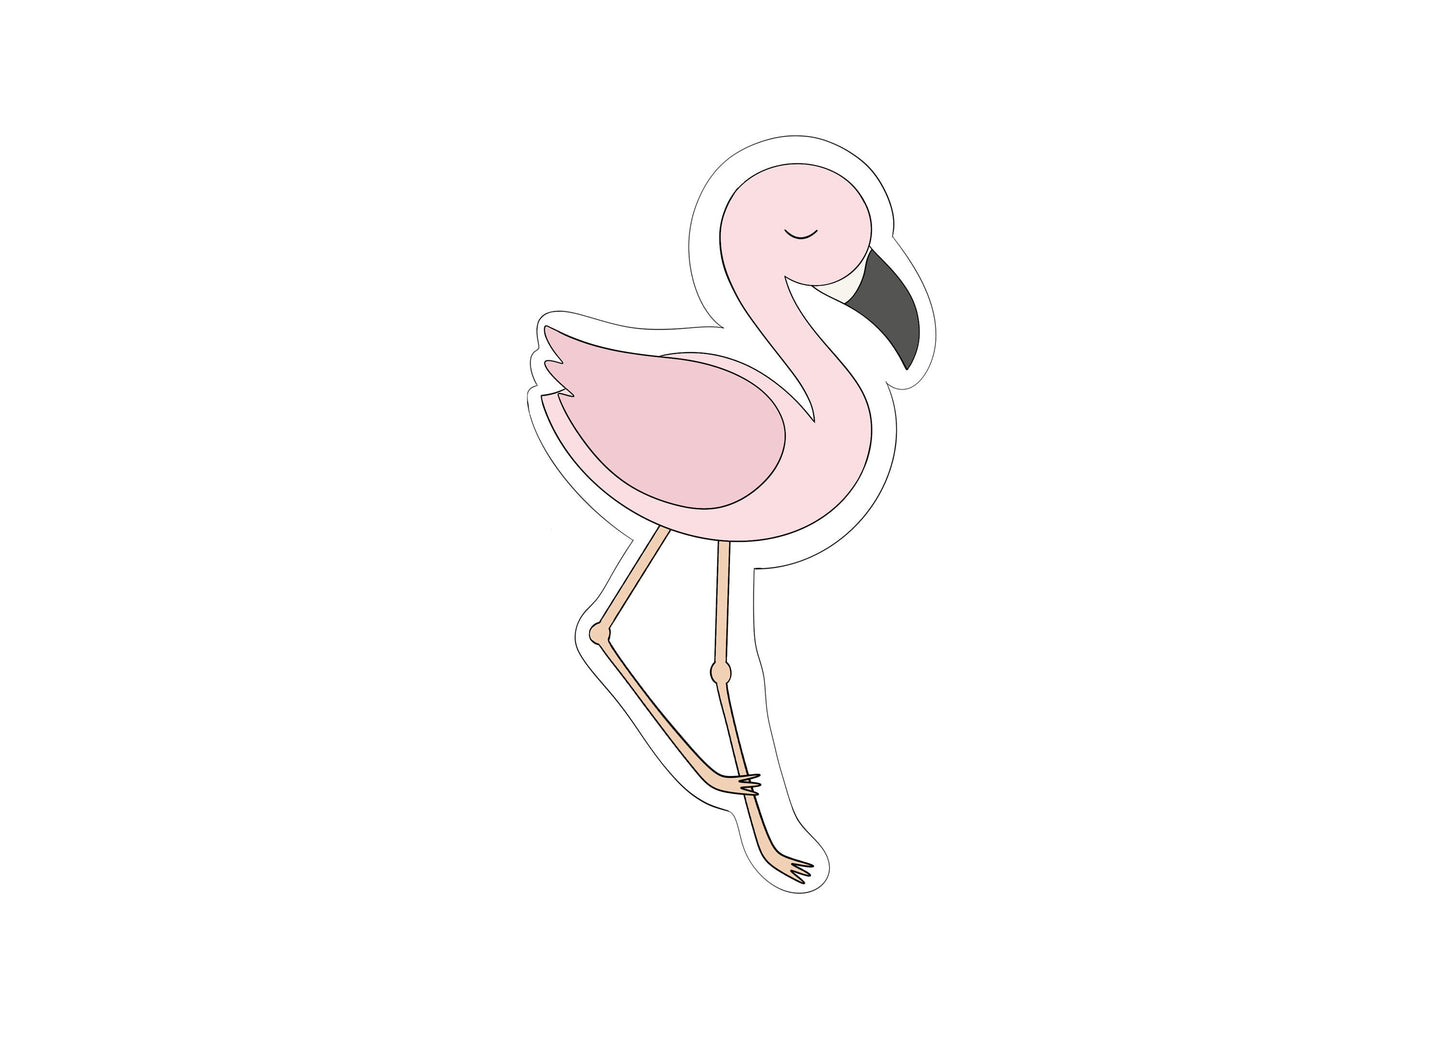 Flamingo Cookie Cutter